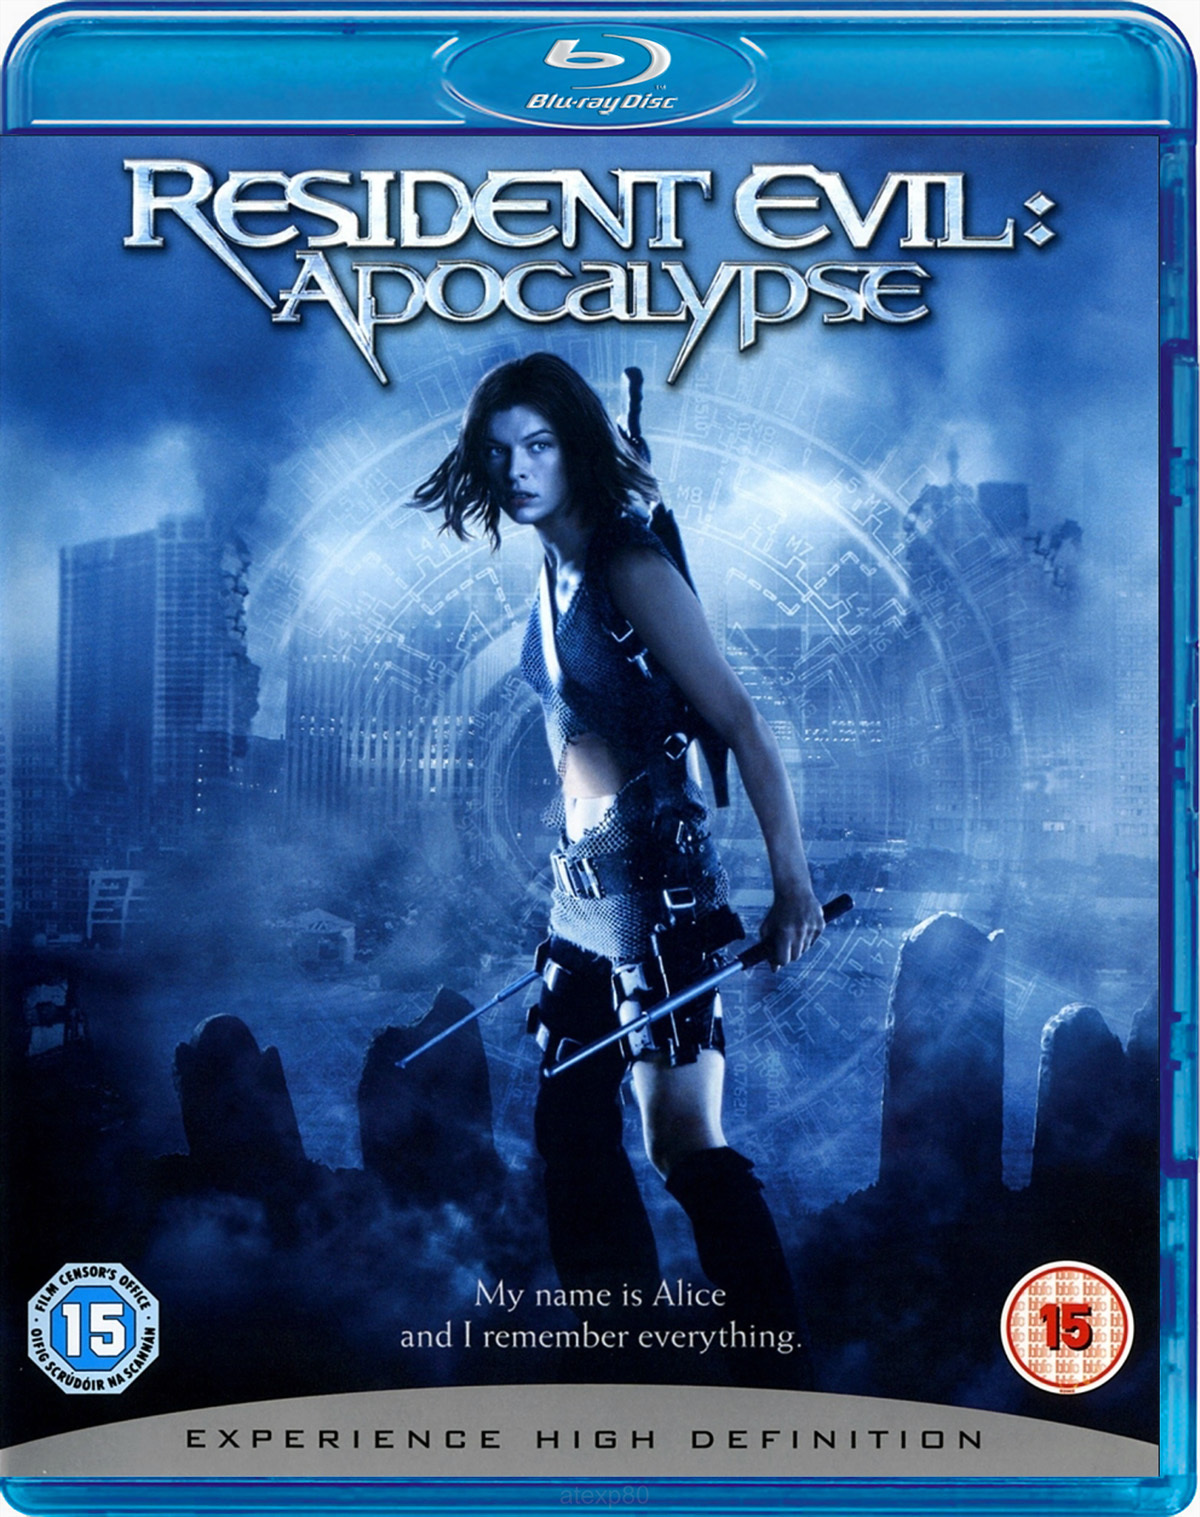 Resident Evil: Apocalypse Pics, Movie Collection